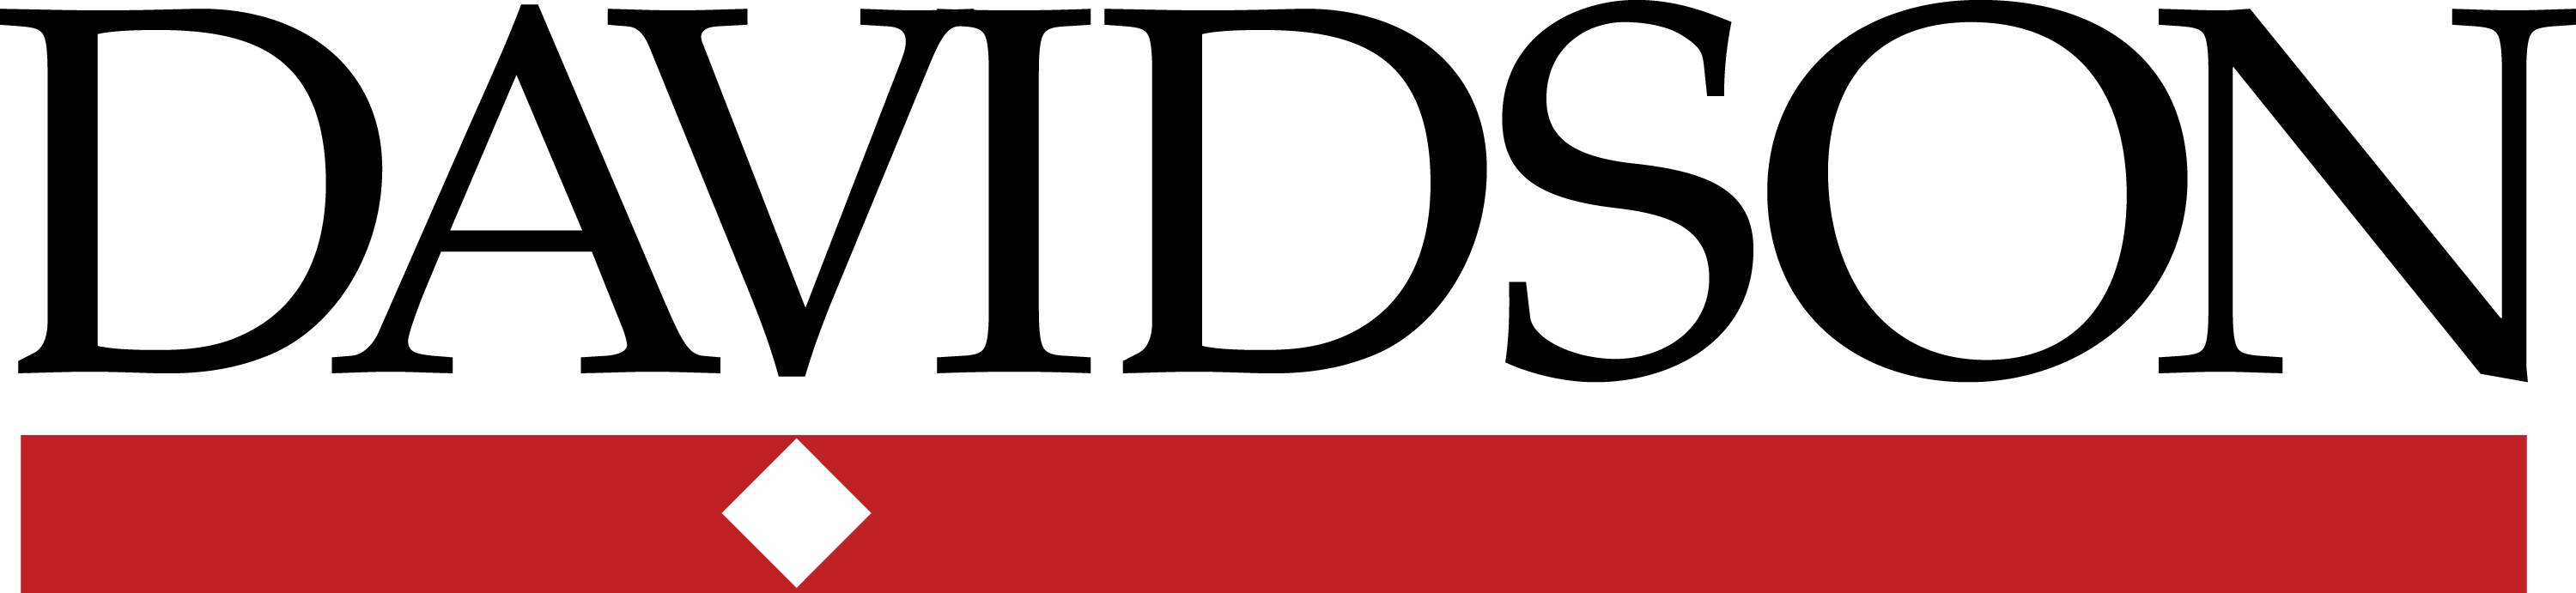 Davidson-College-Red-Black-Logo-PNG